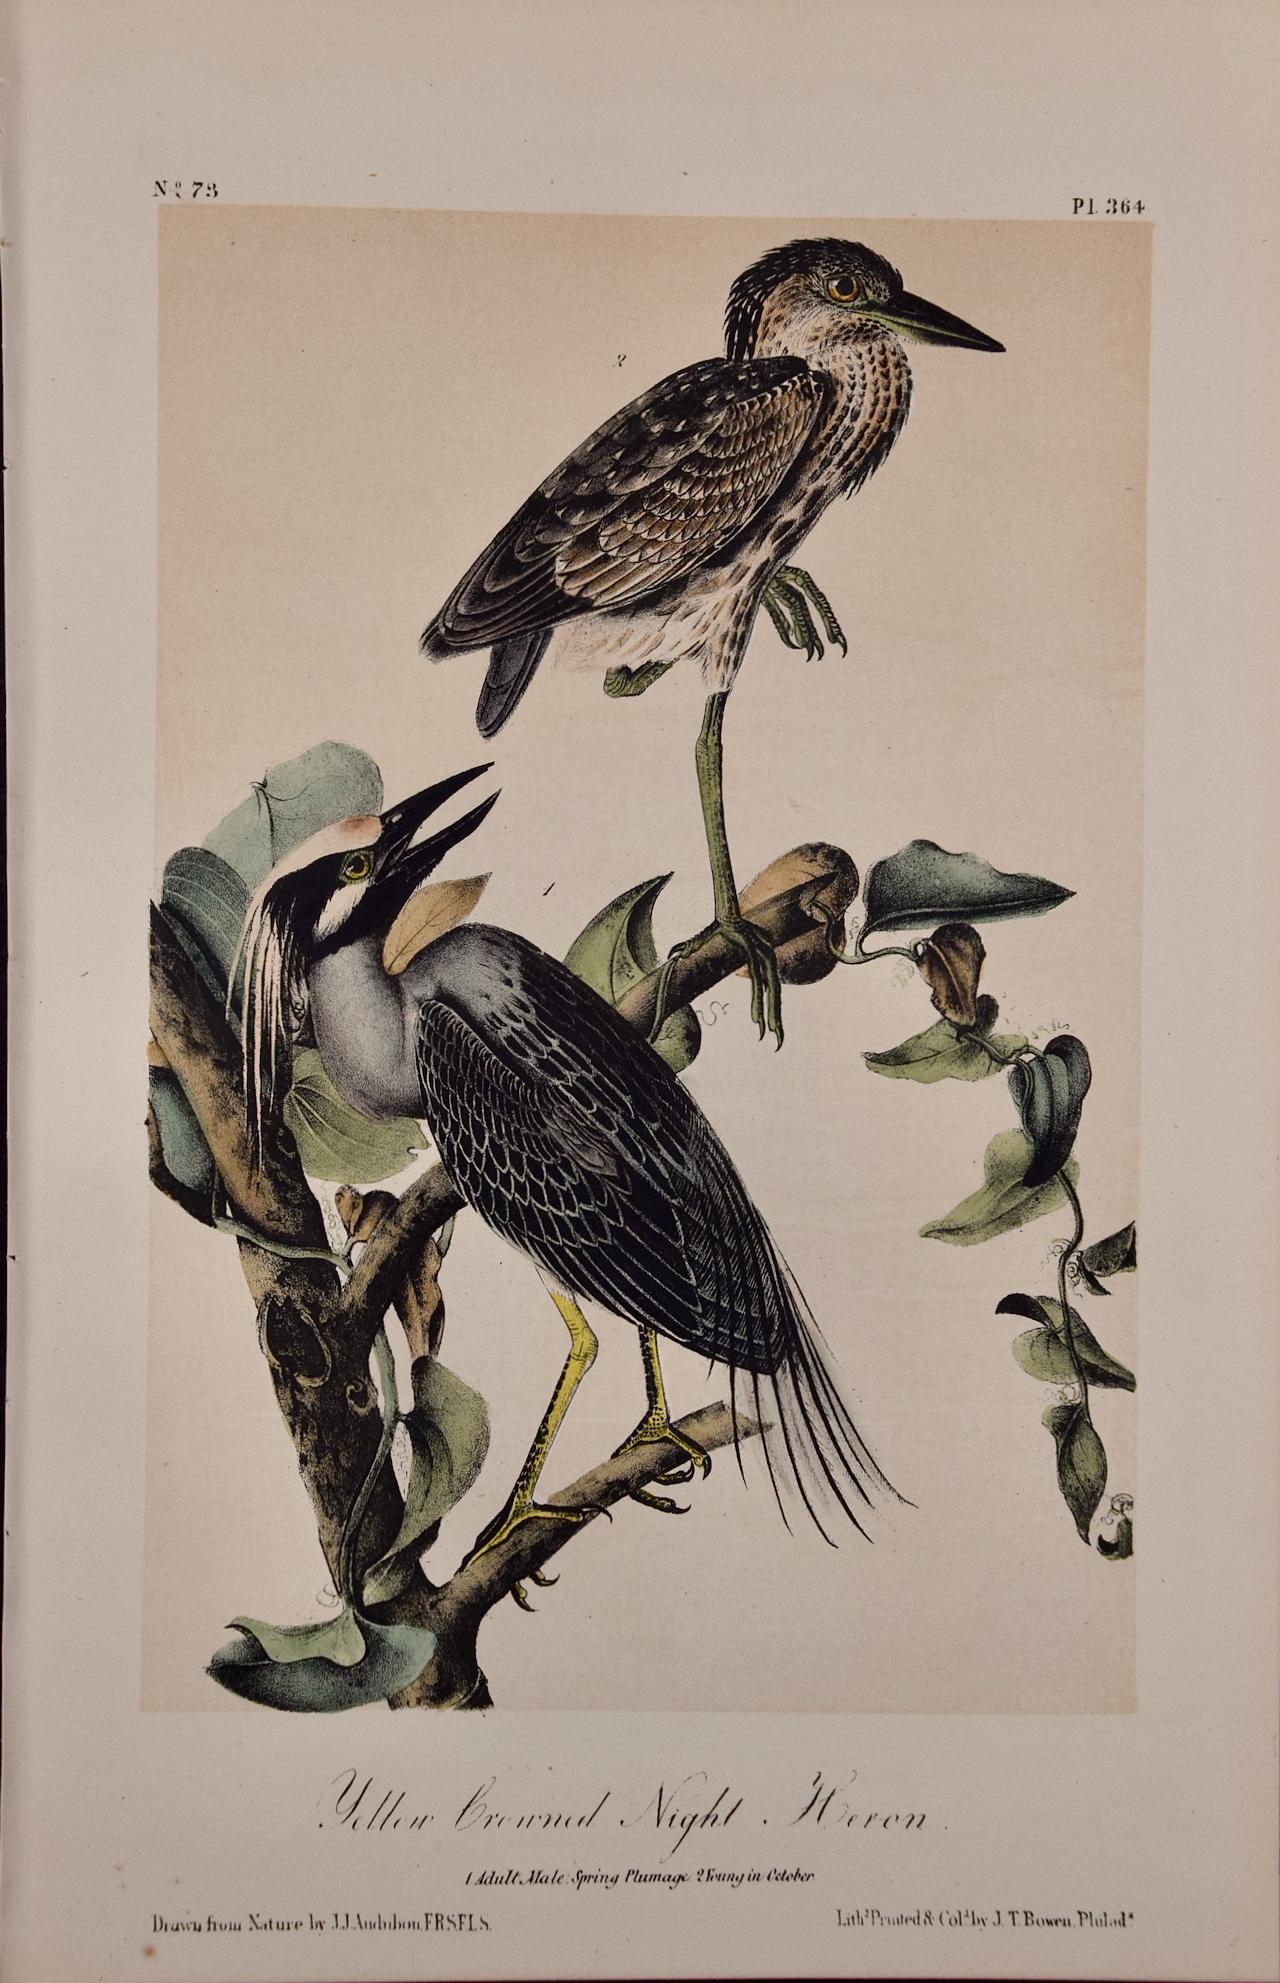 John James Audubon Landscape Print - Night Heron Birds: An Original 19th C. Audubon Hand-colored Bird Lithograph